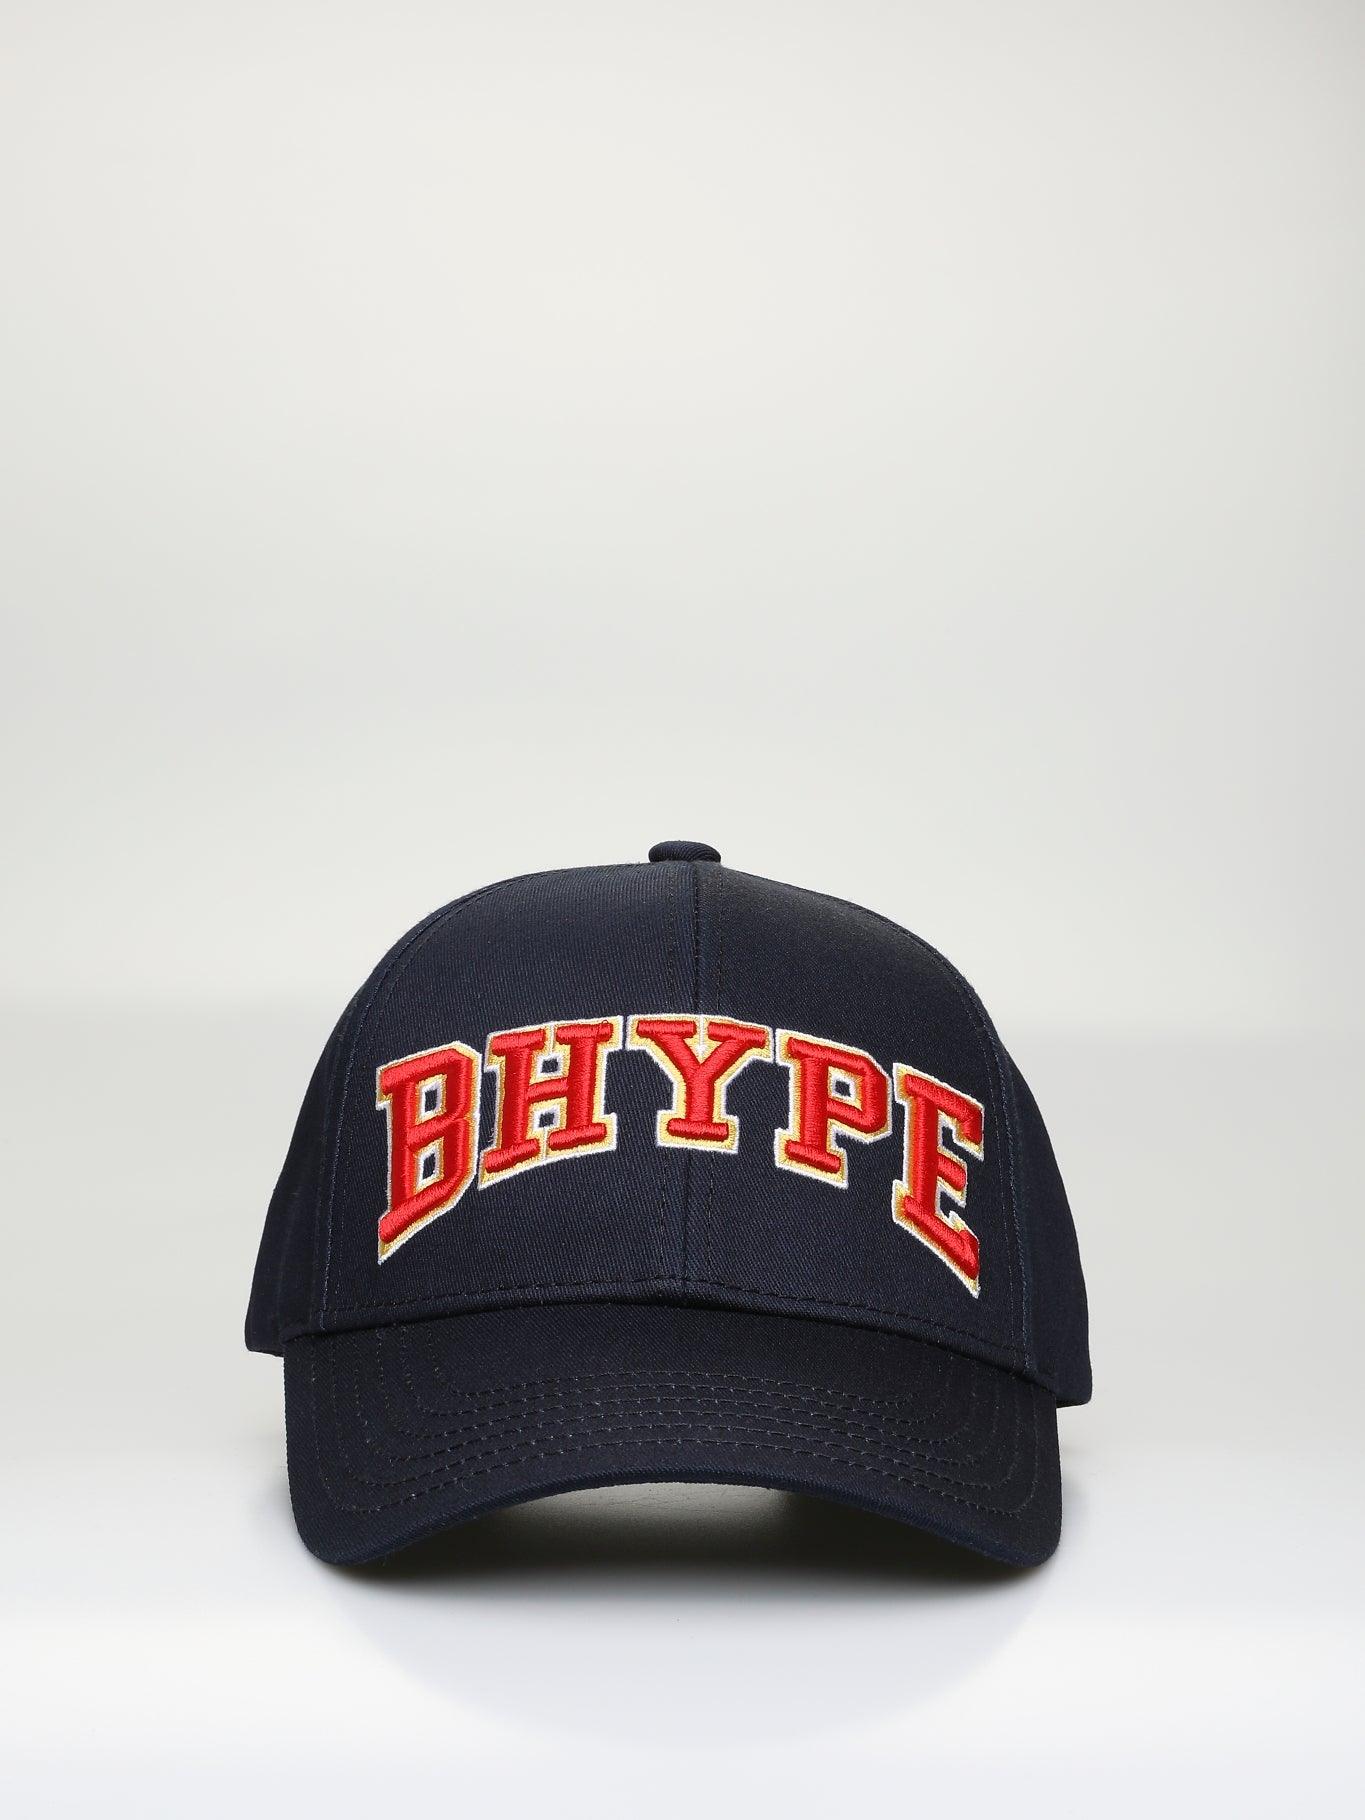 BHYPE NAVY BASEBALL CAP - B-Hype Society